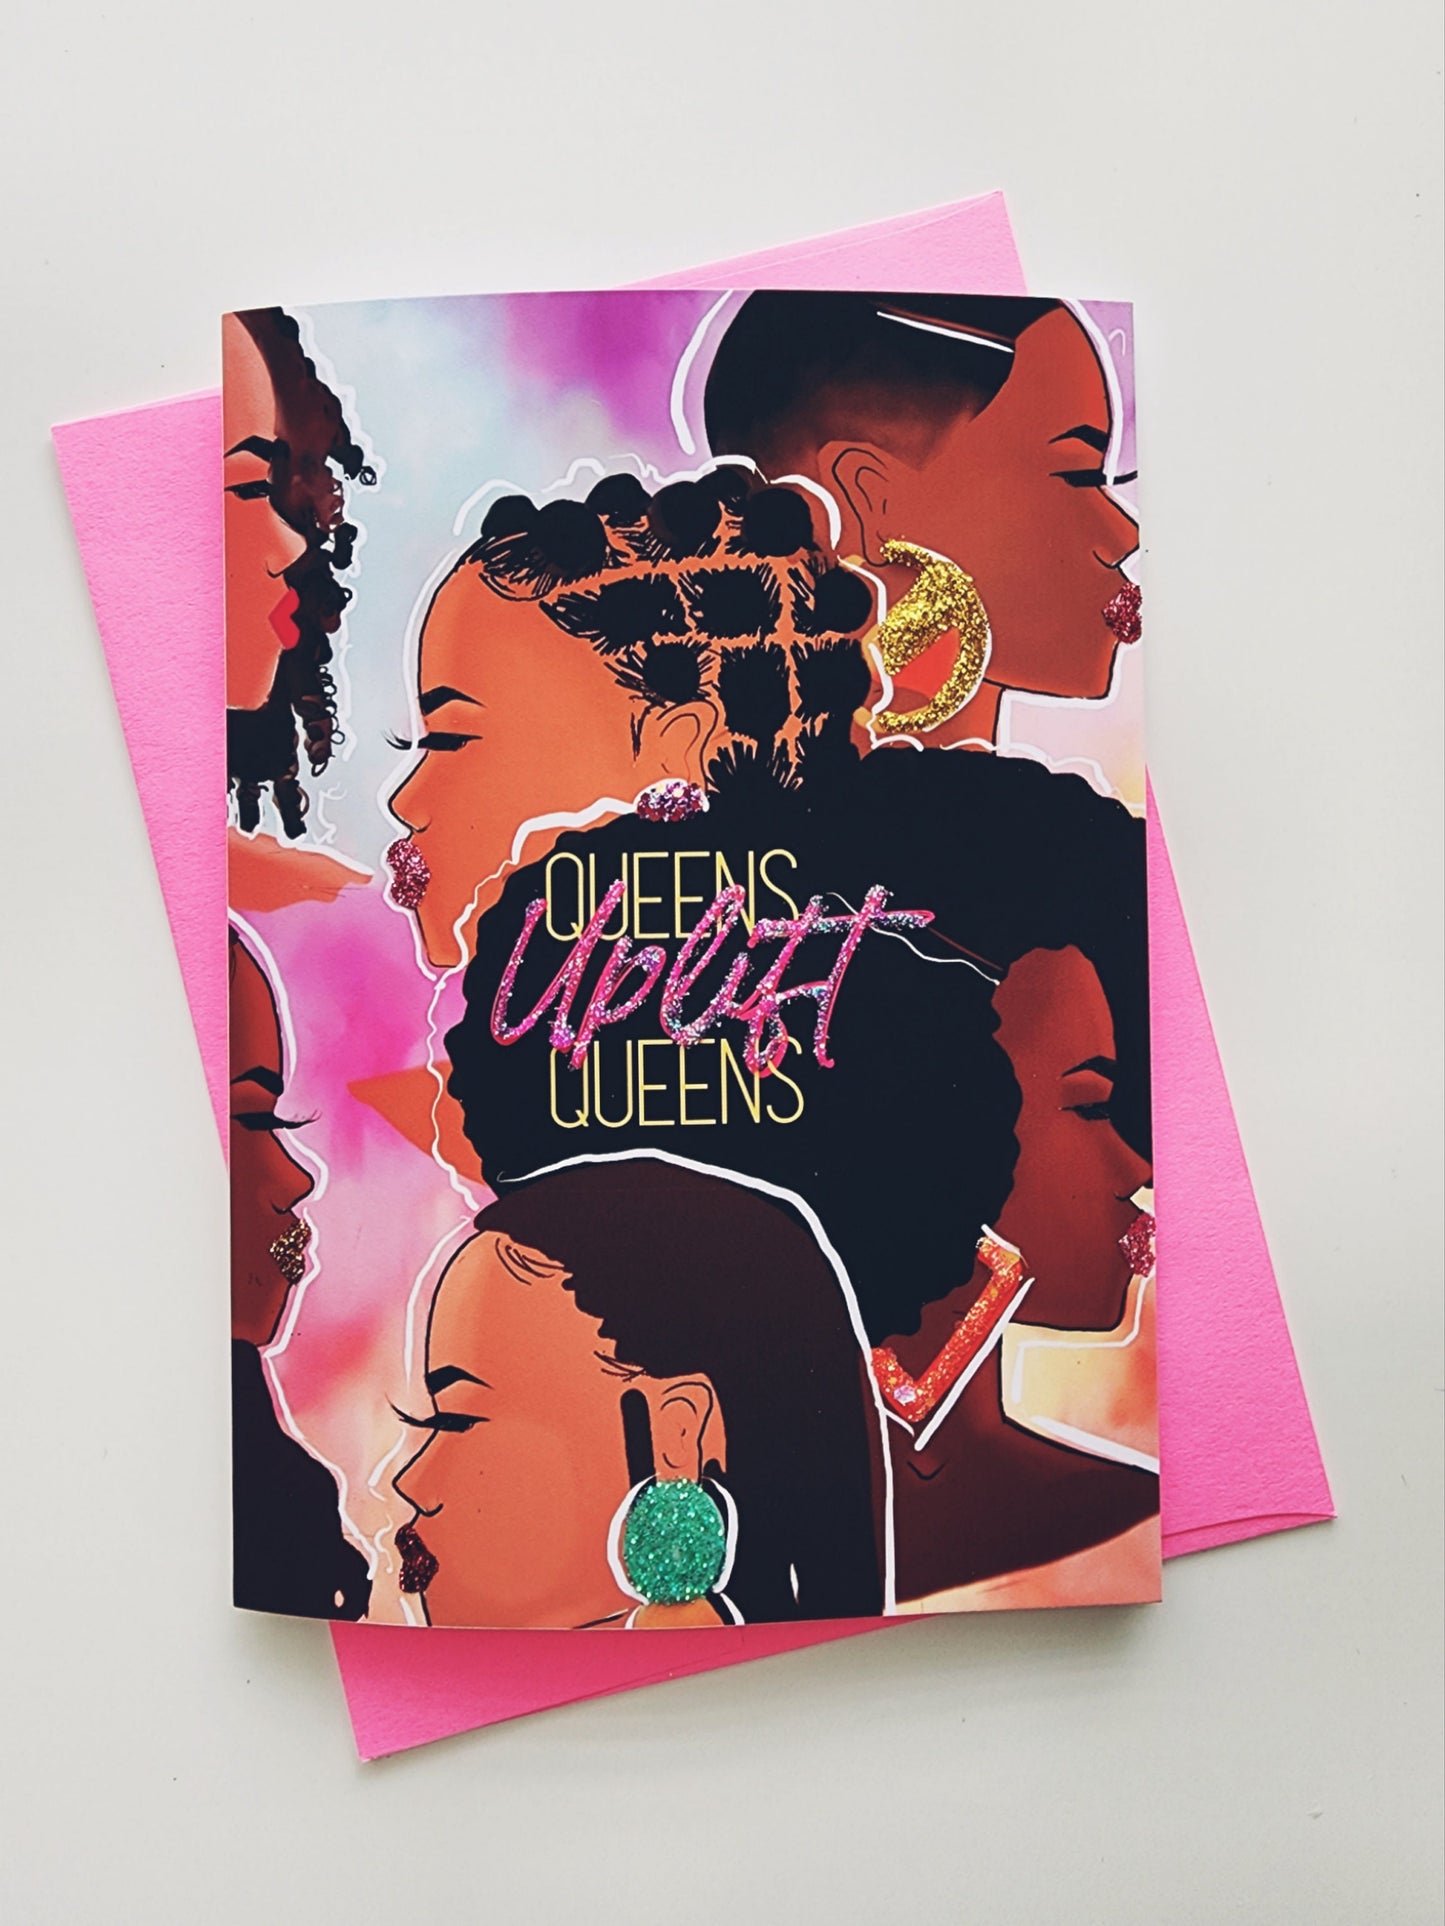 Queens Uplift Queens - Empowerment | Black Girl Greetings | Woman | African American Greeting Card | Illustration | Natural Hair | Melanin